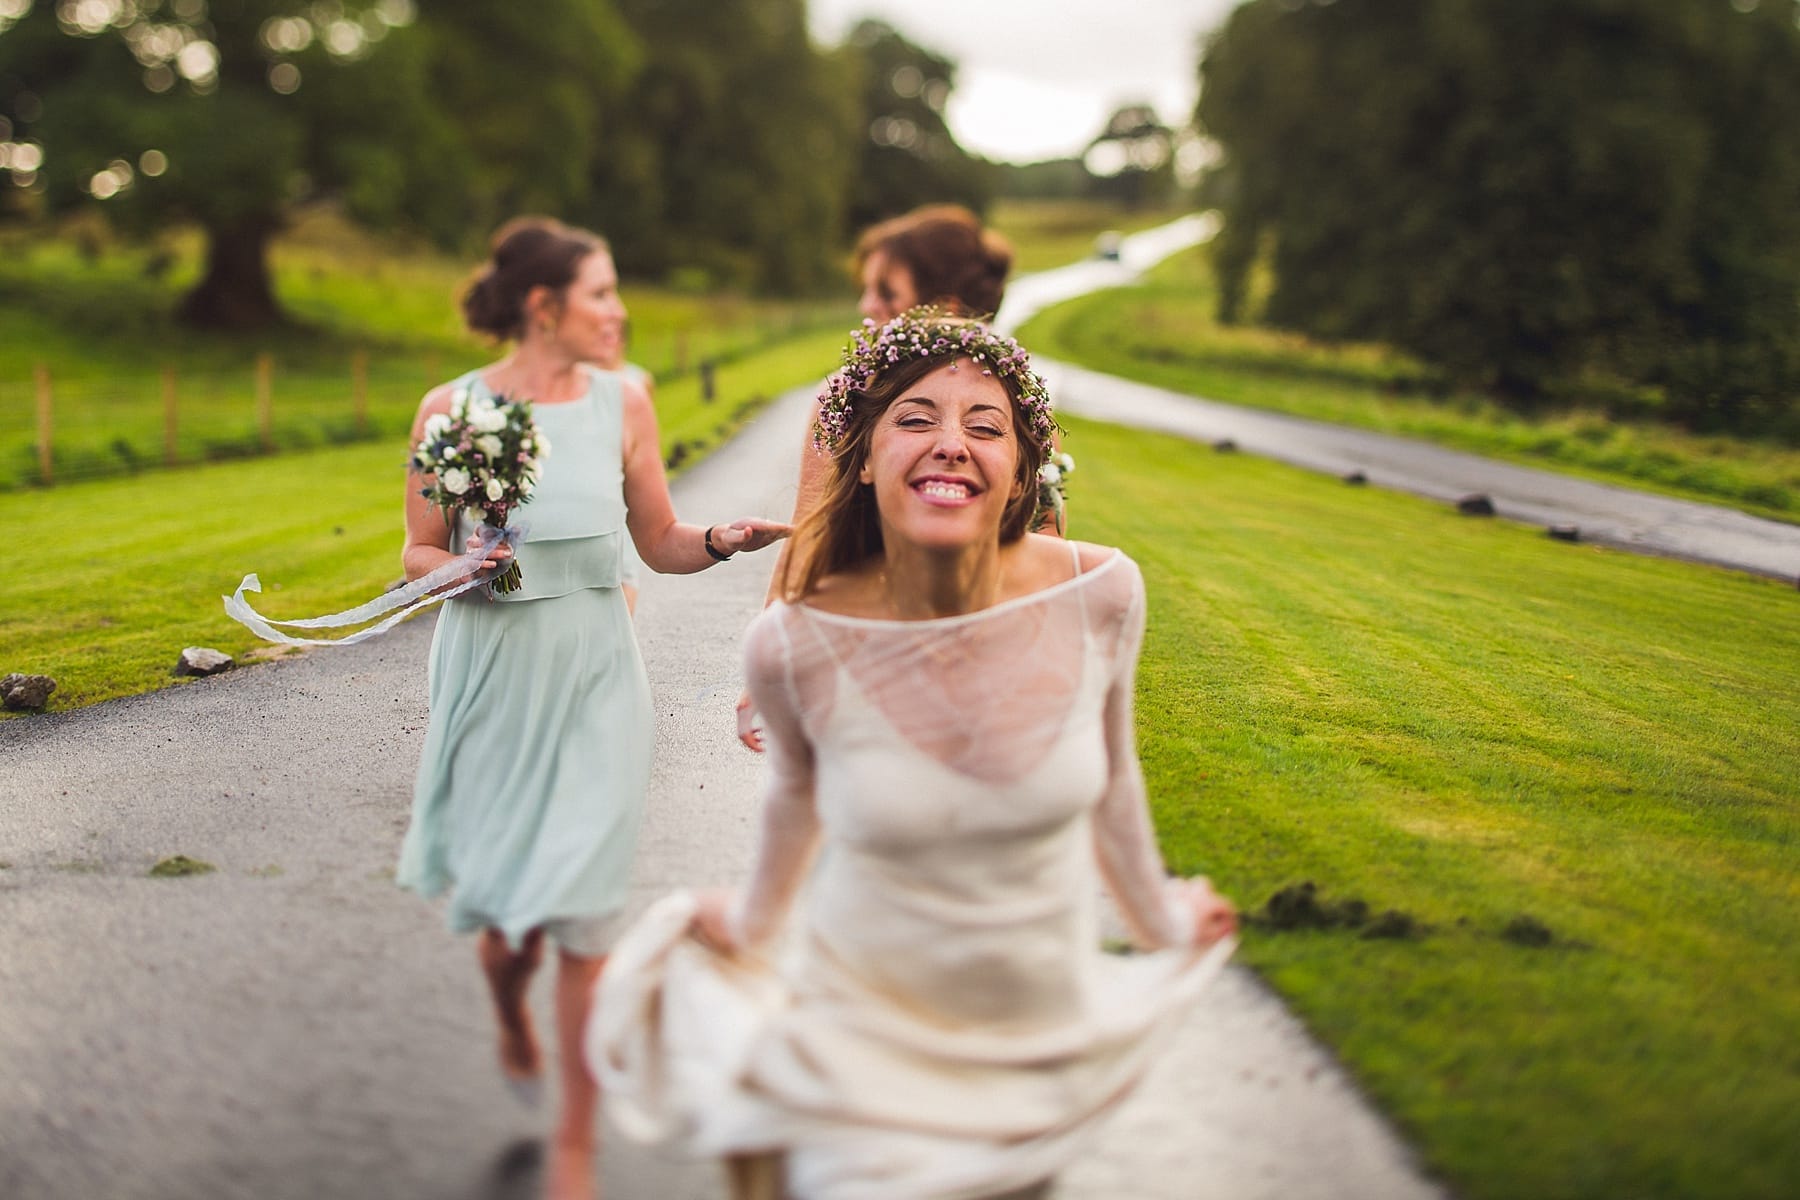 Markree Castle wedding,irish wedding photography,irish bride,scottish groom,